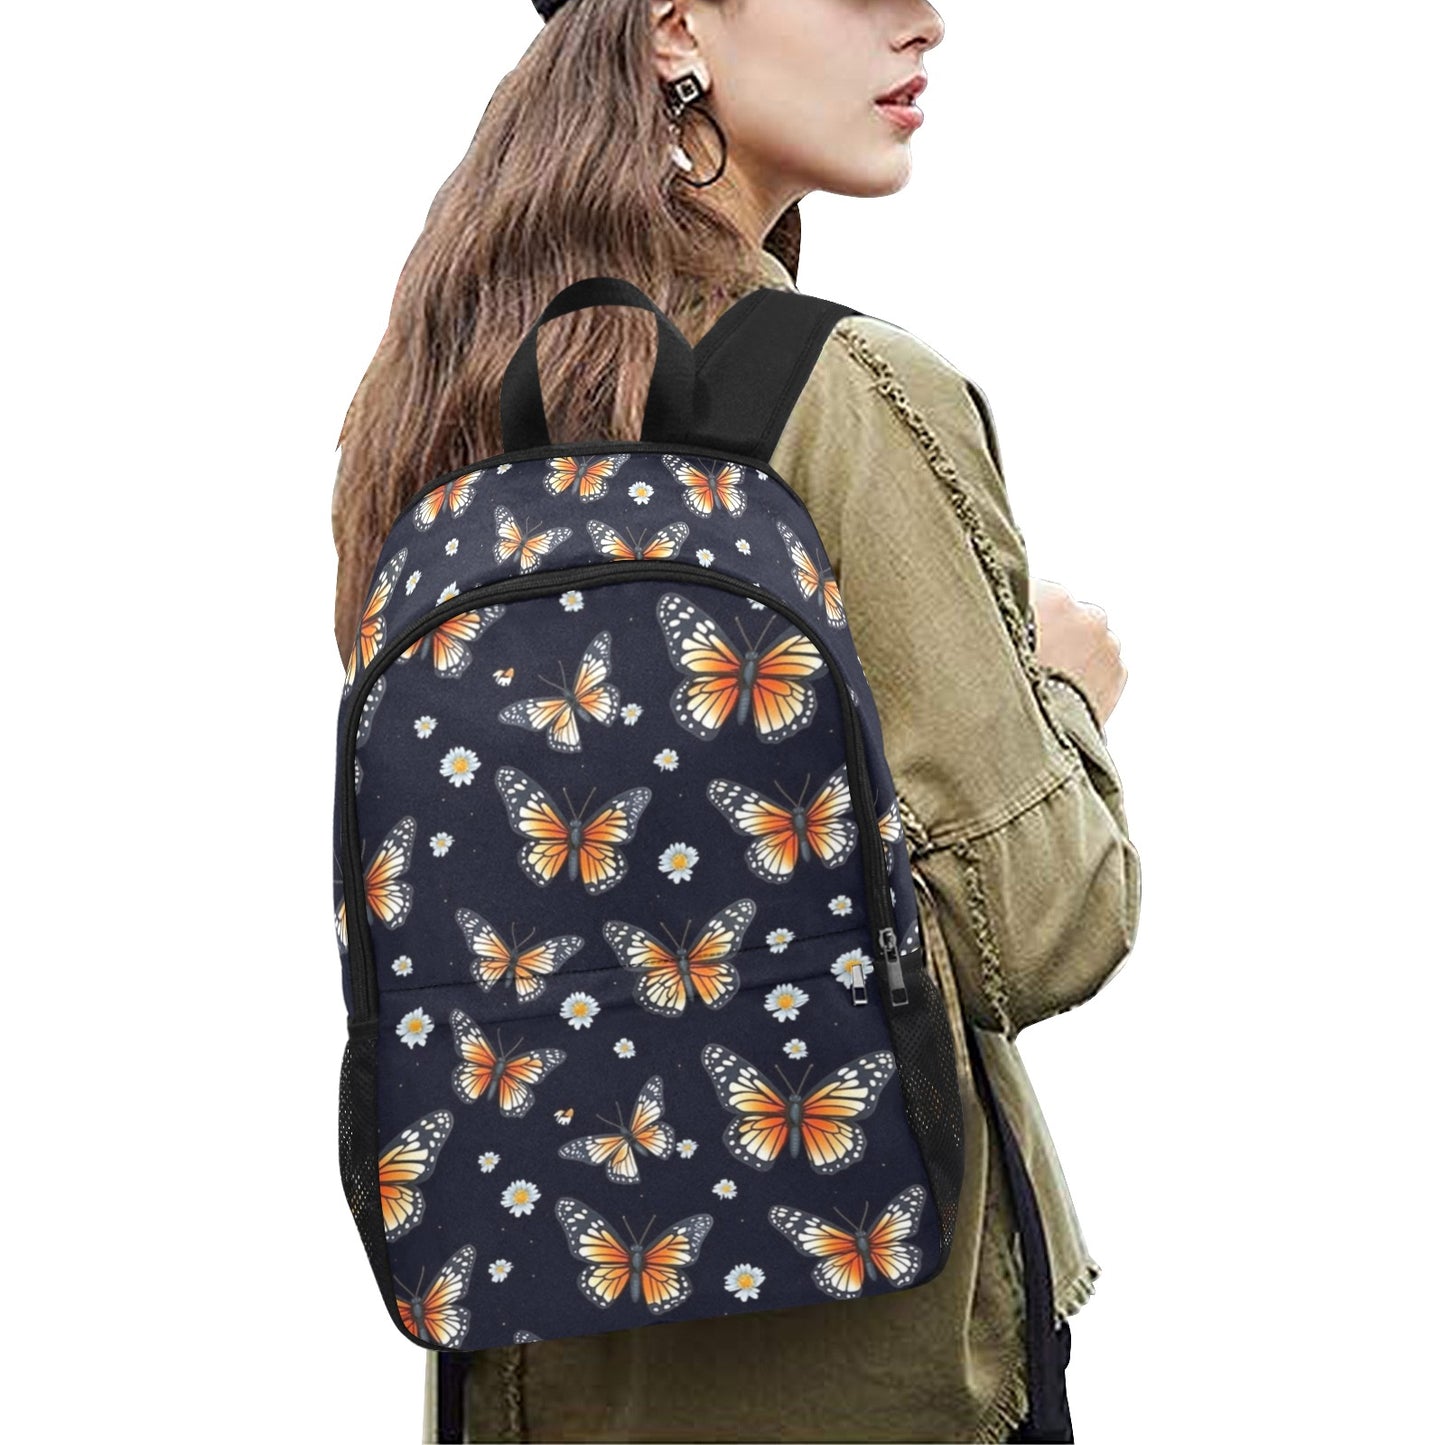 Butterfly Backpack, Floral Flowers Print Men Women Kids Gift Him Her School College Waterproof Side Mesh Pockets Aesthetic Bag